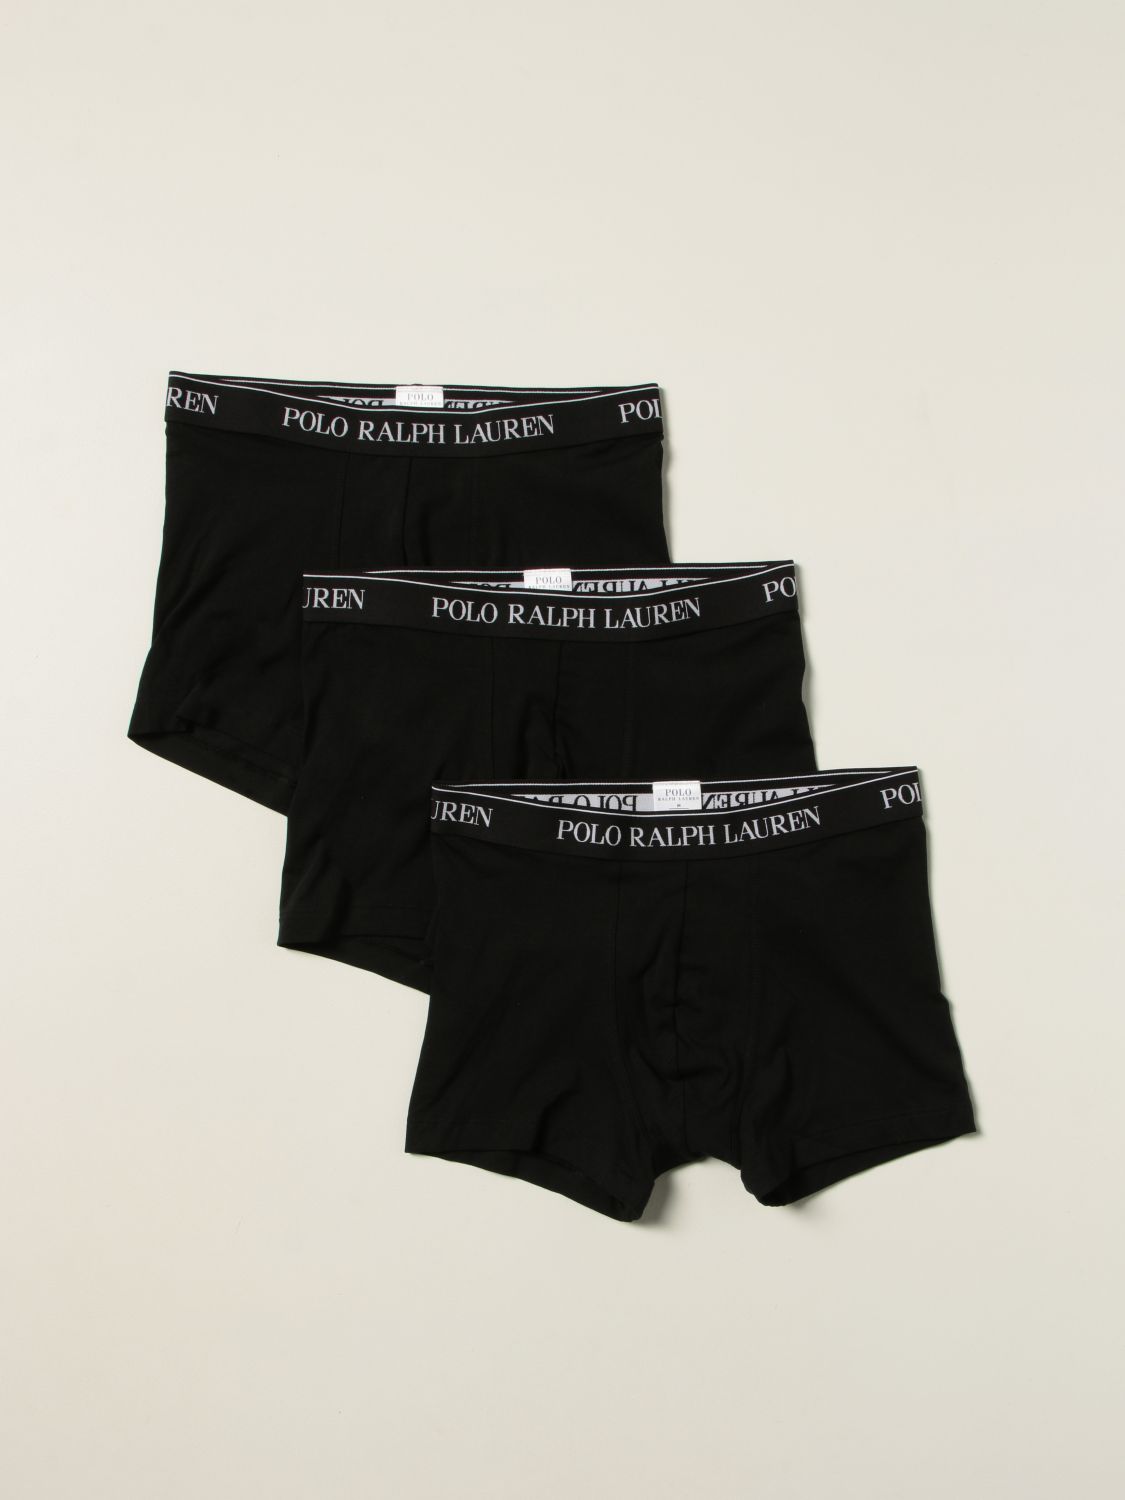 内衣 Polo Ralph Lauren: Polo Ralph Lauren Logo 四角内裤3件装 黑色 1